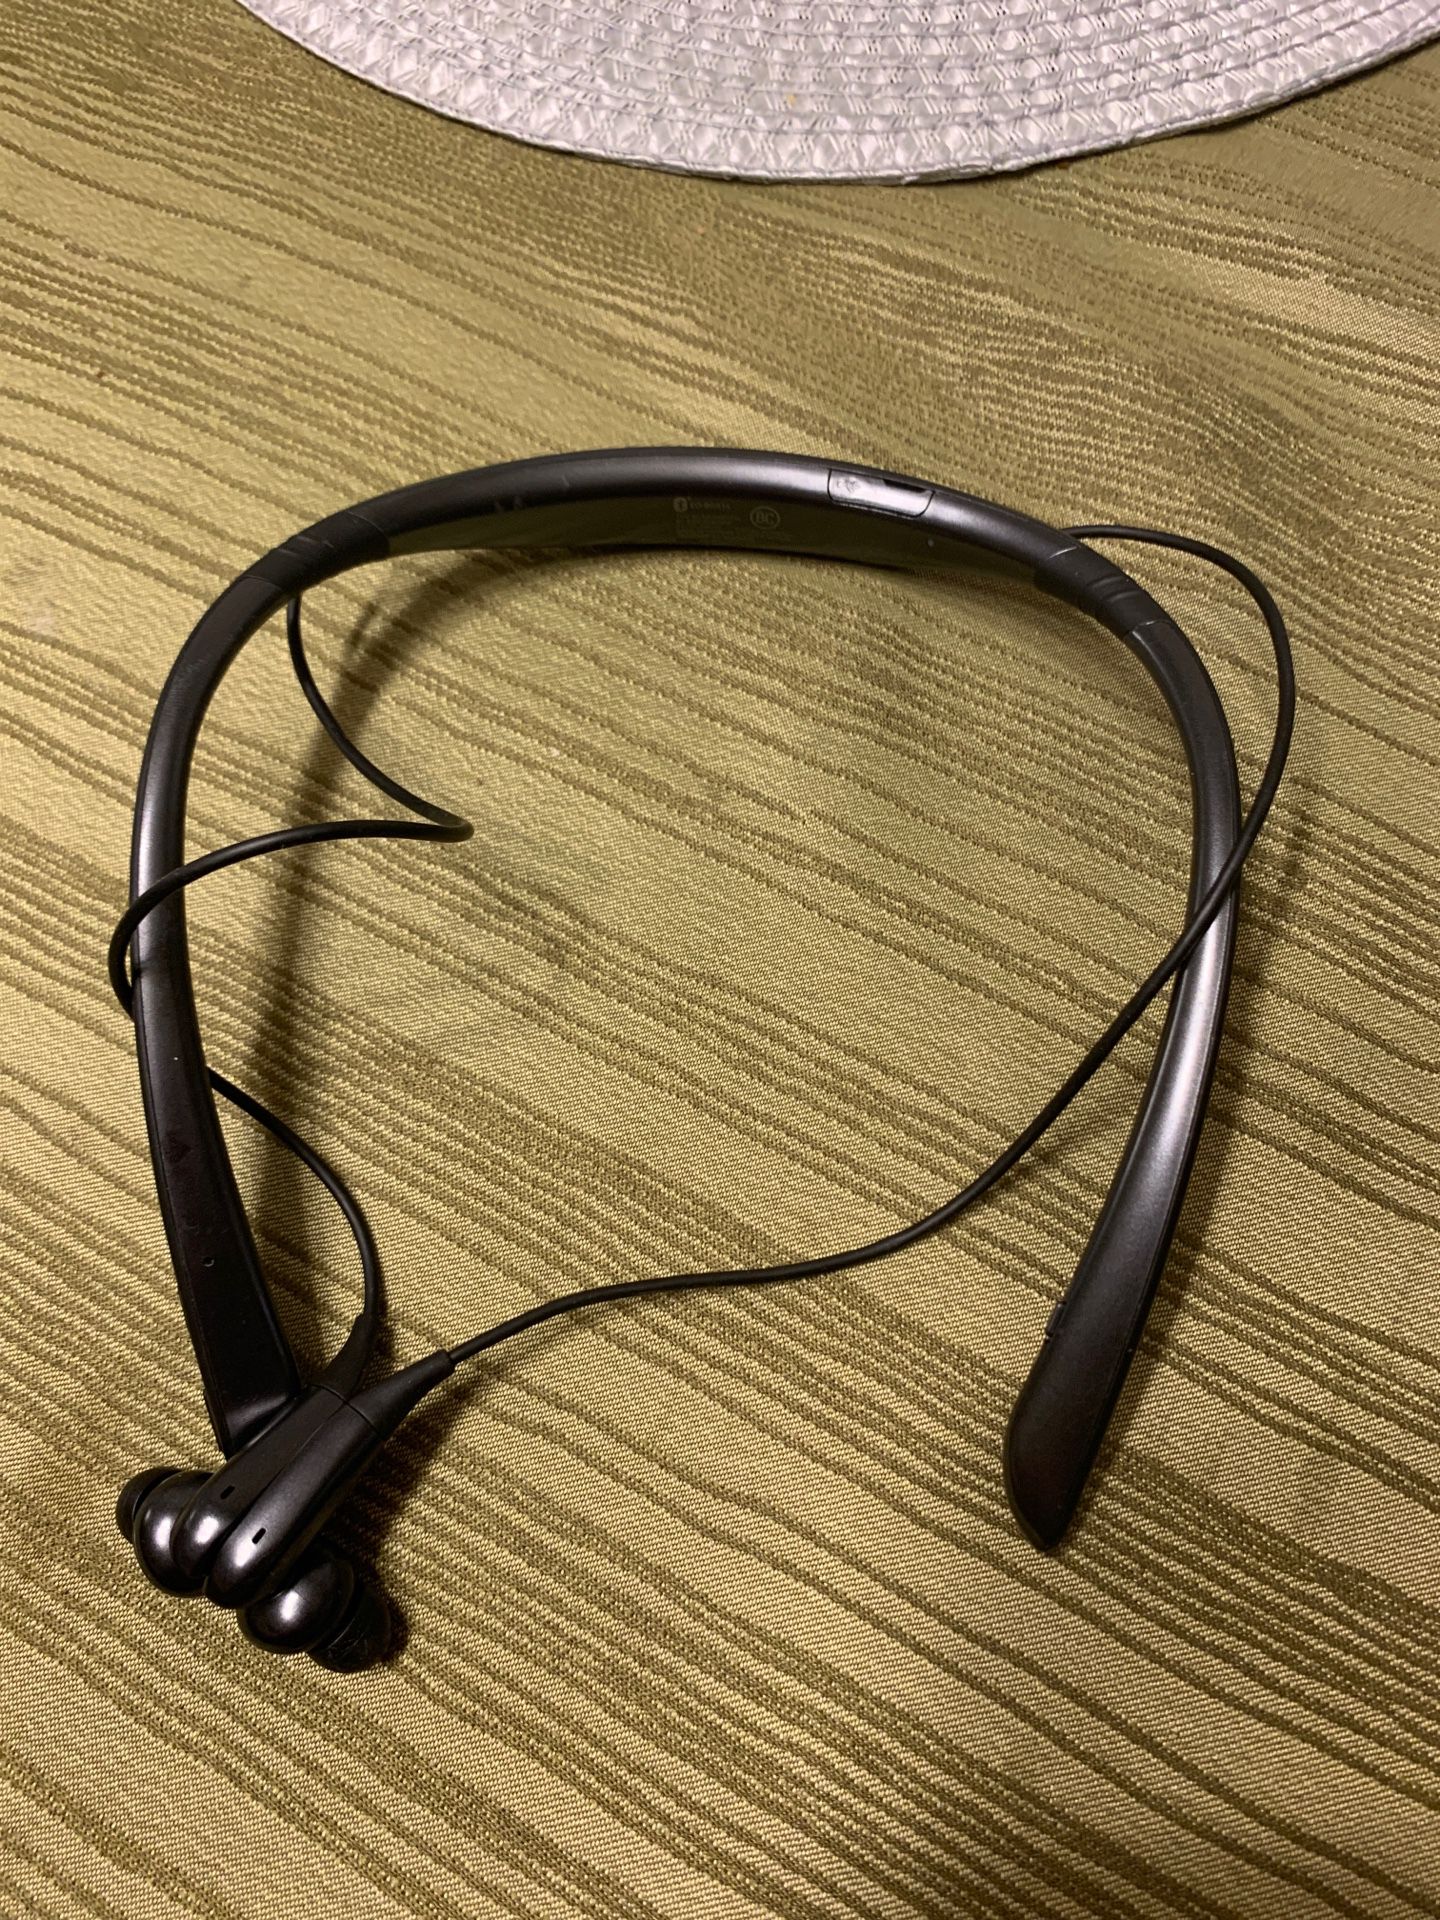 Samsung level wireless headphones